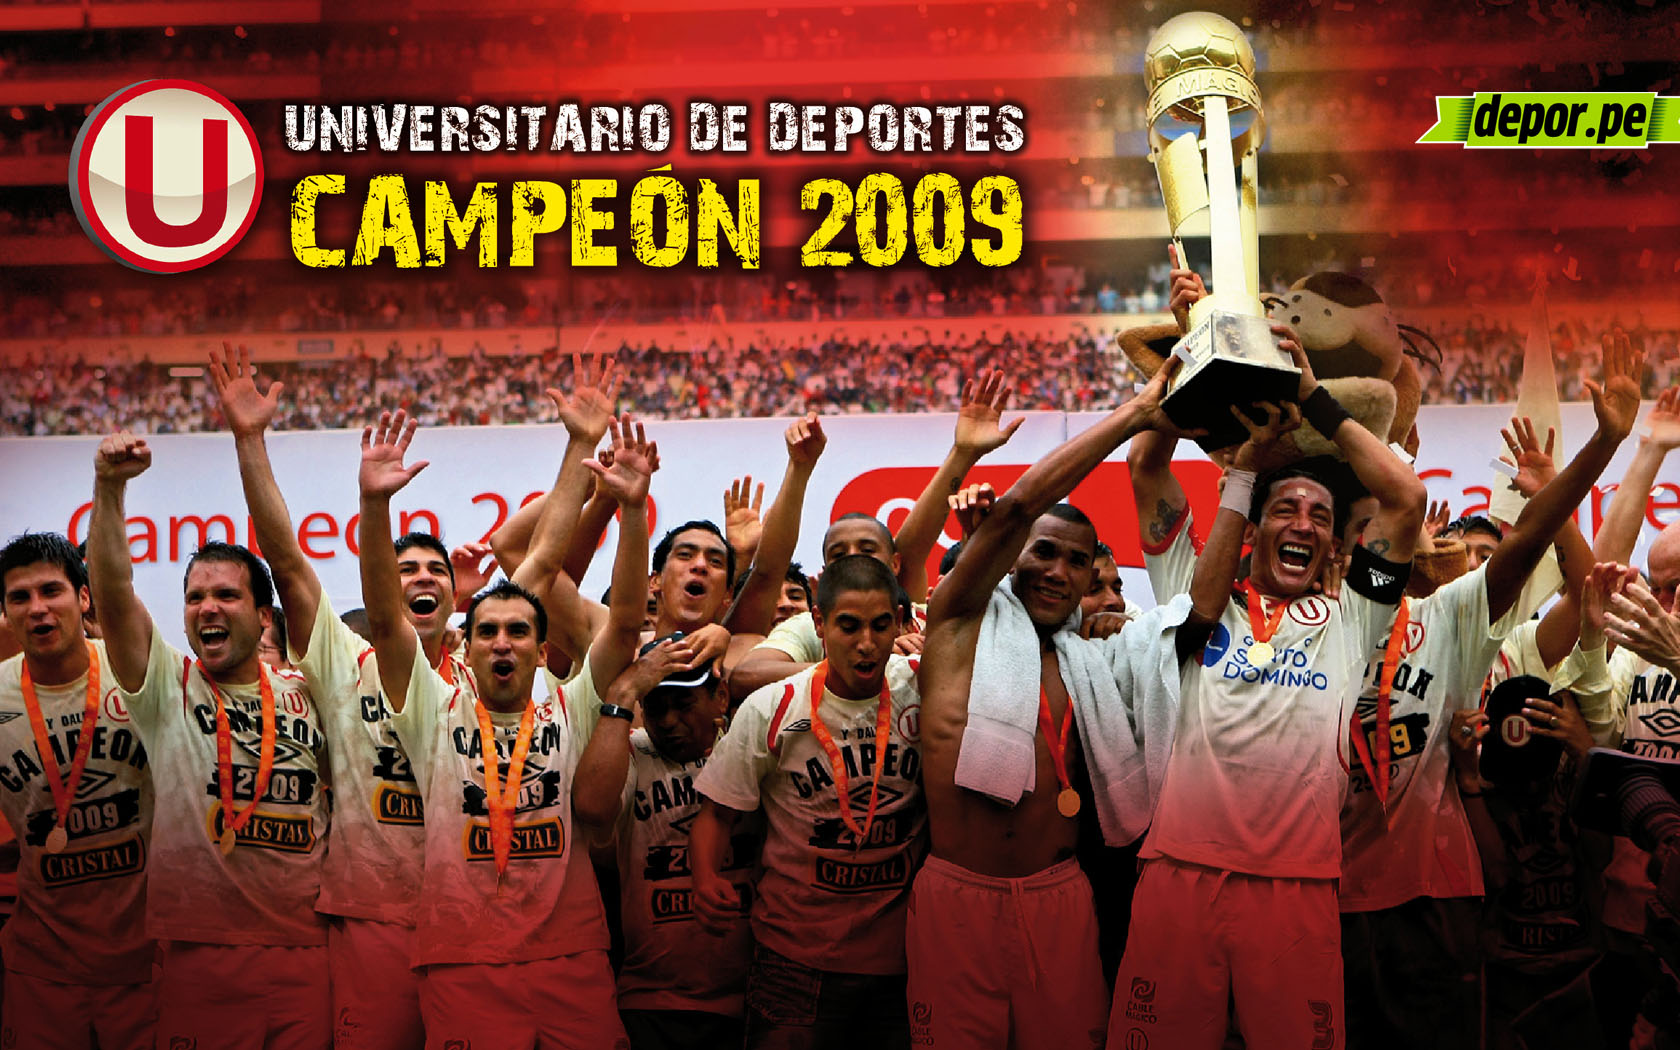 Campeonato - 2009 , HD Wallpaper & Backgrounds